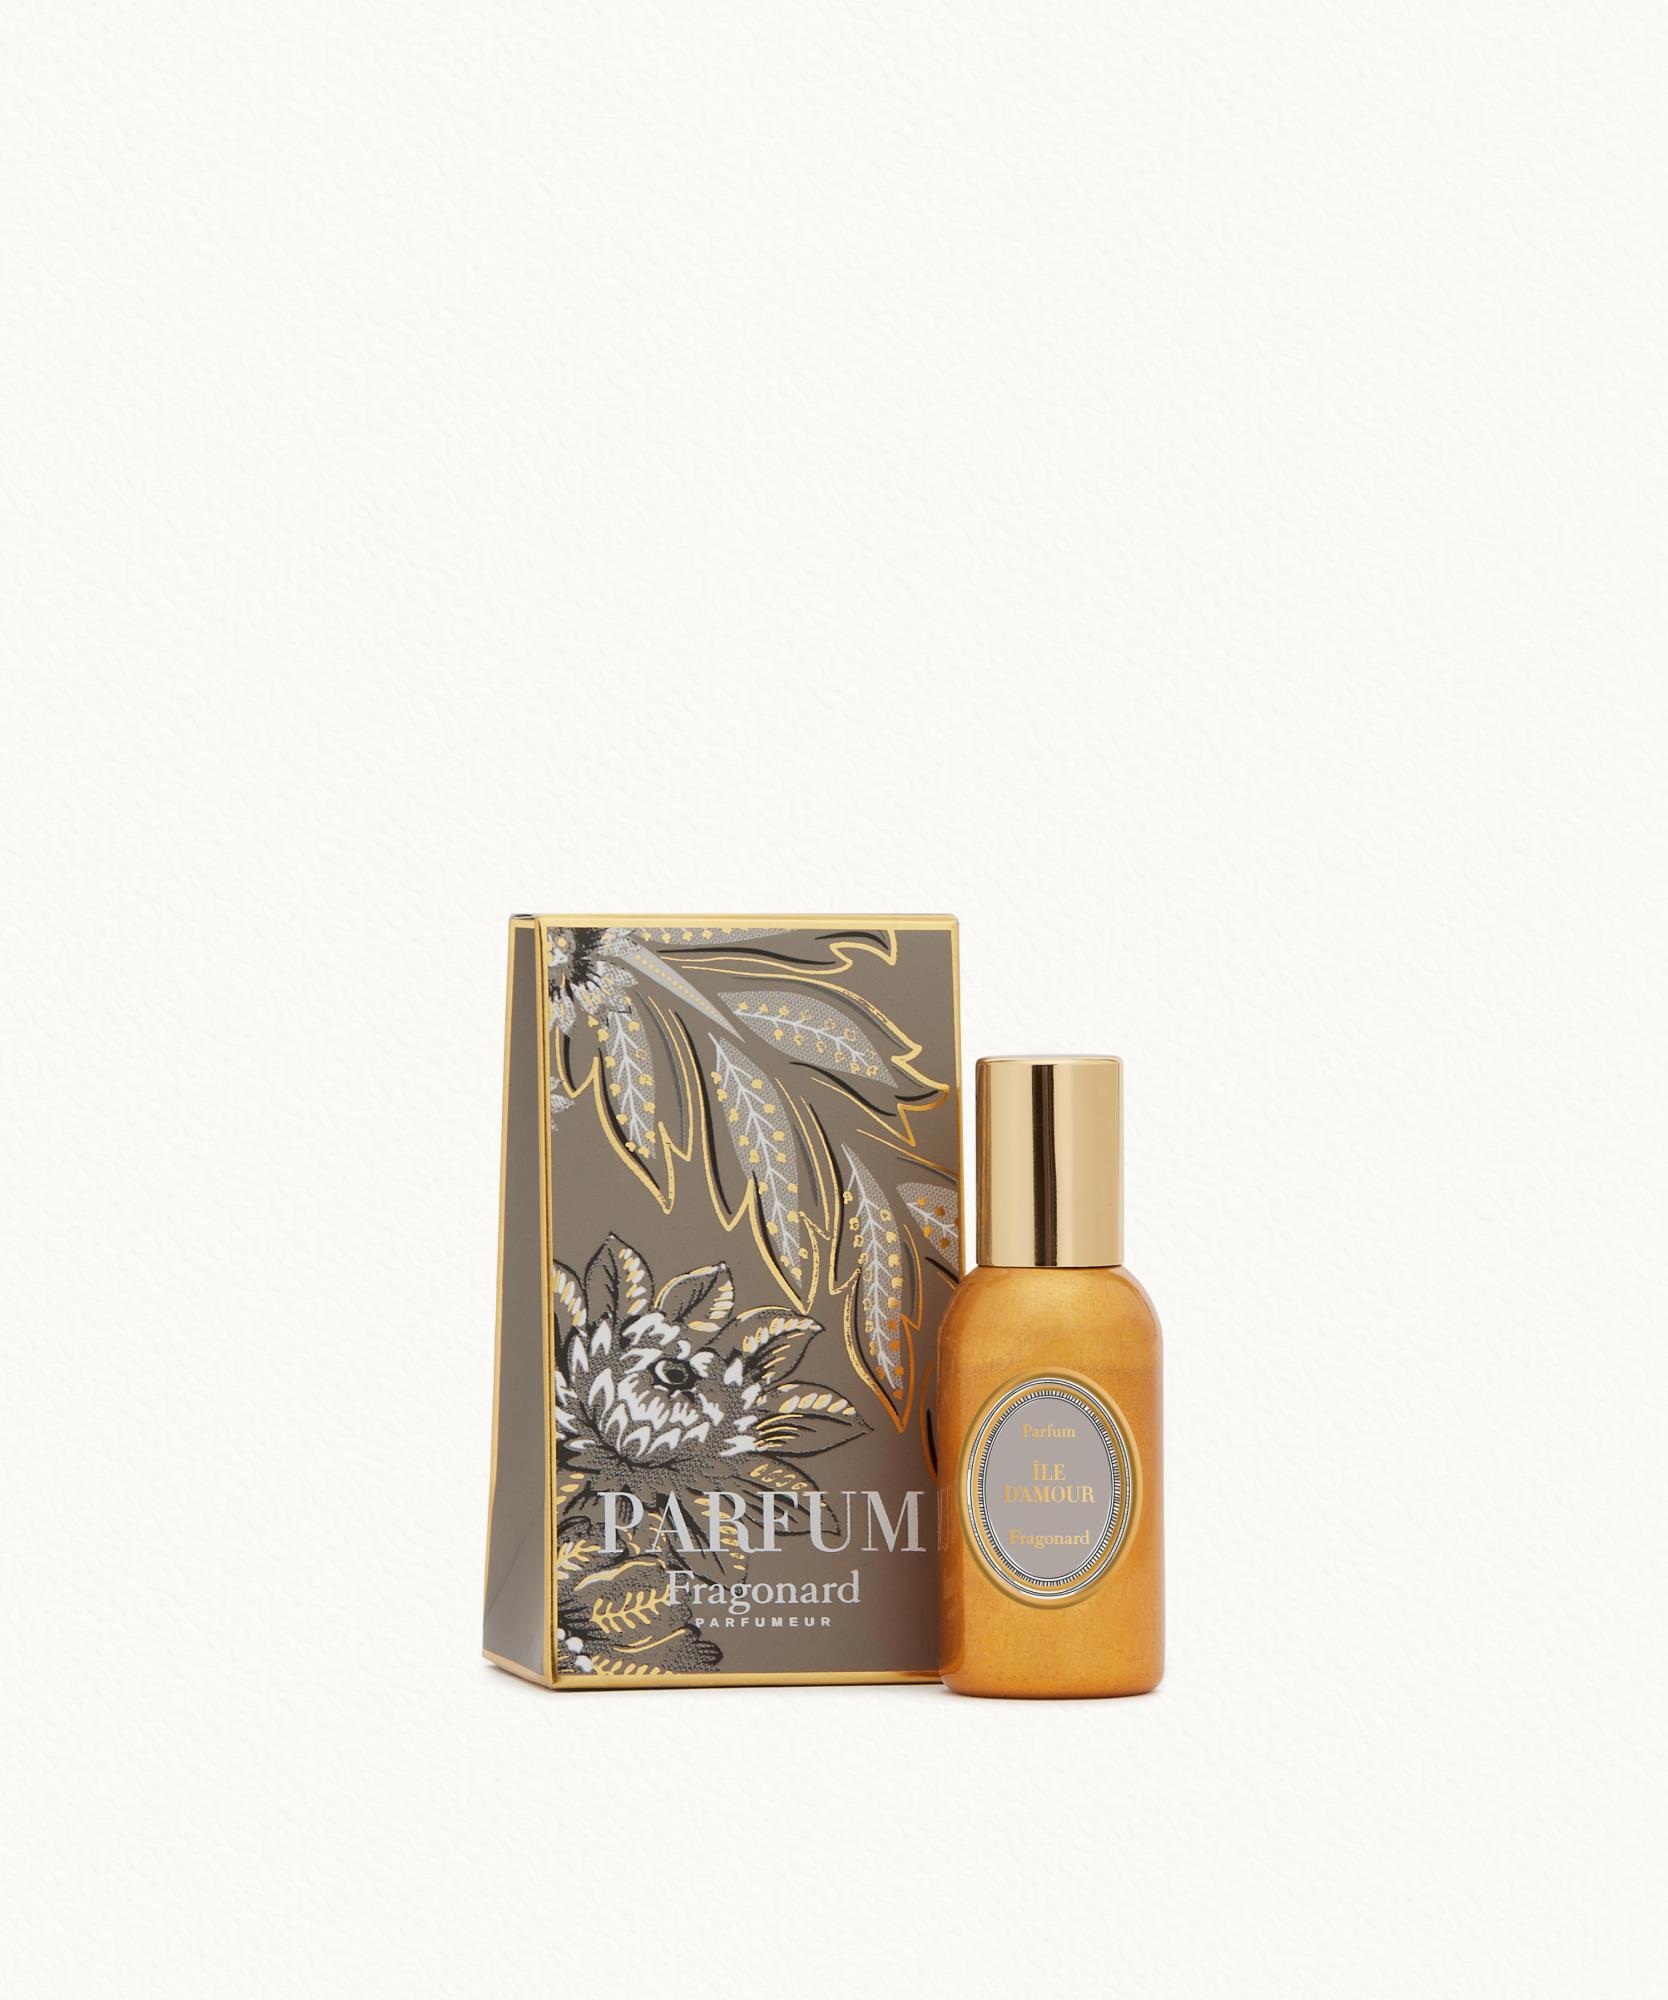 Ile d'Amour Perfume Gilded Alu Natural Spray 30 ml Fragonard - $ 70.00